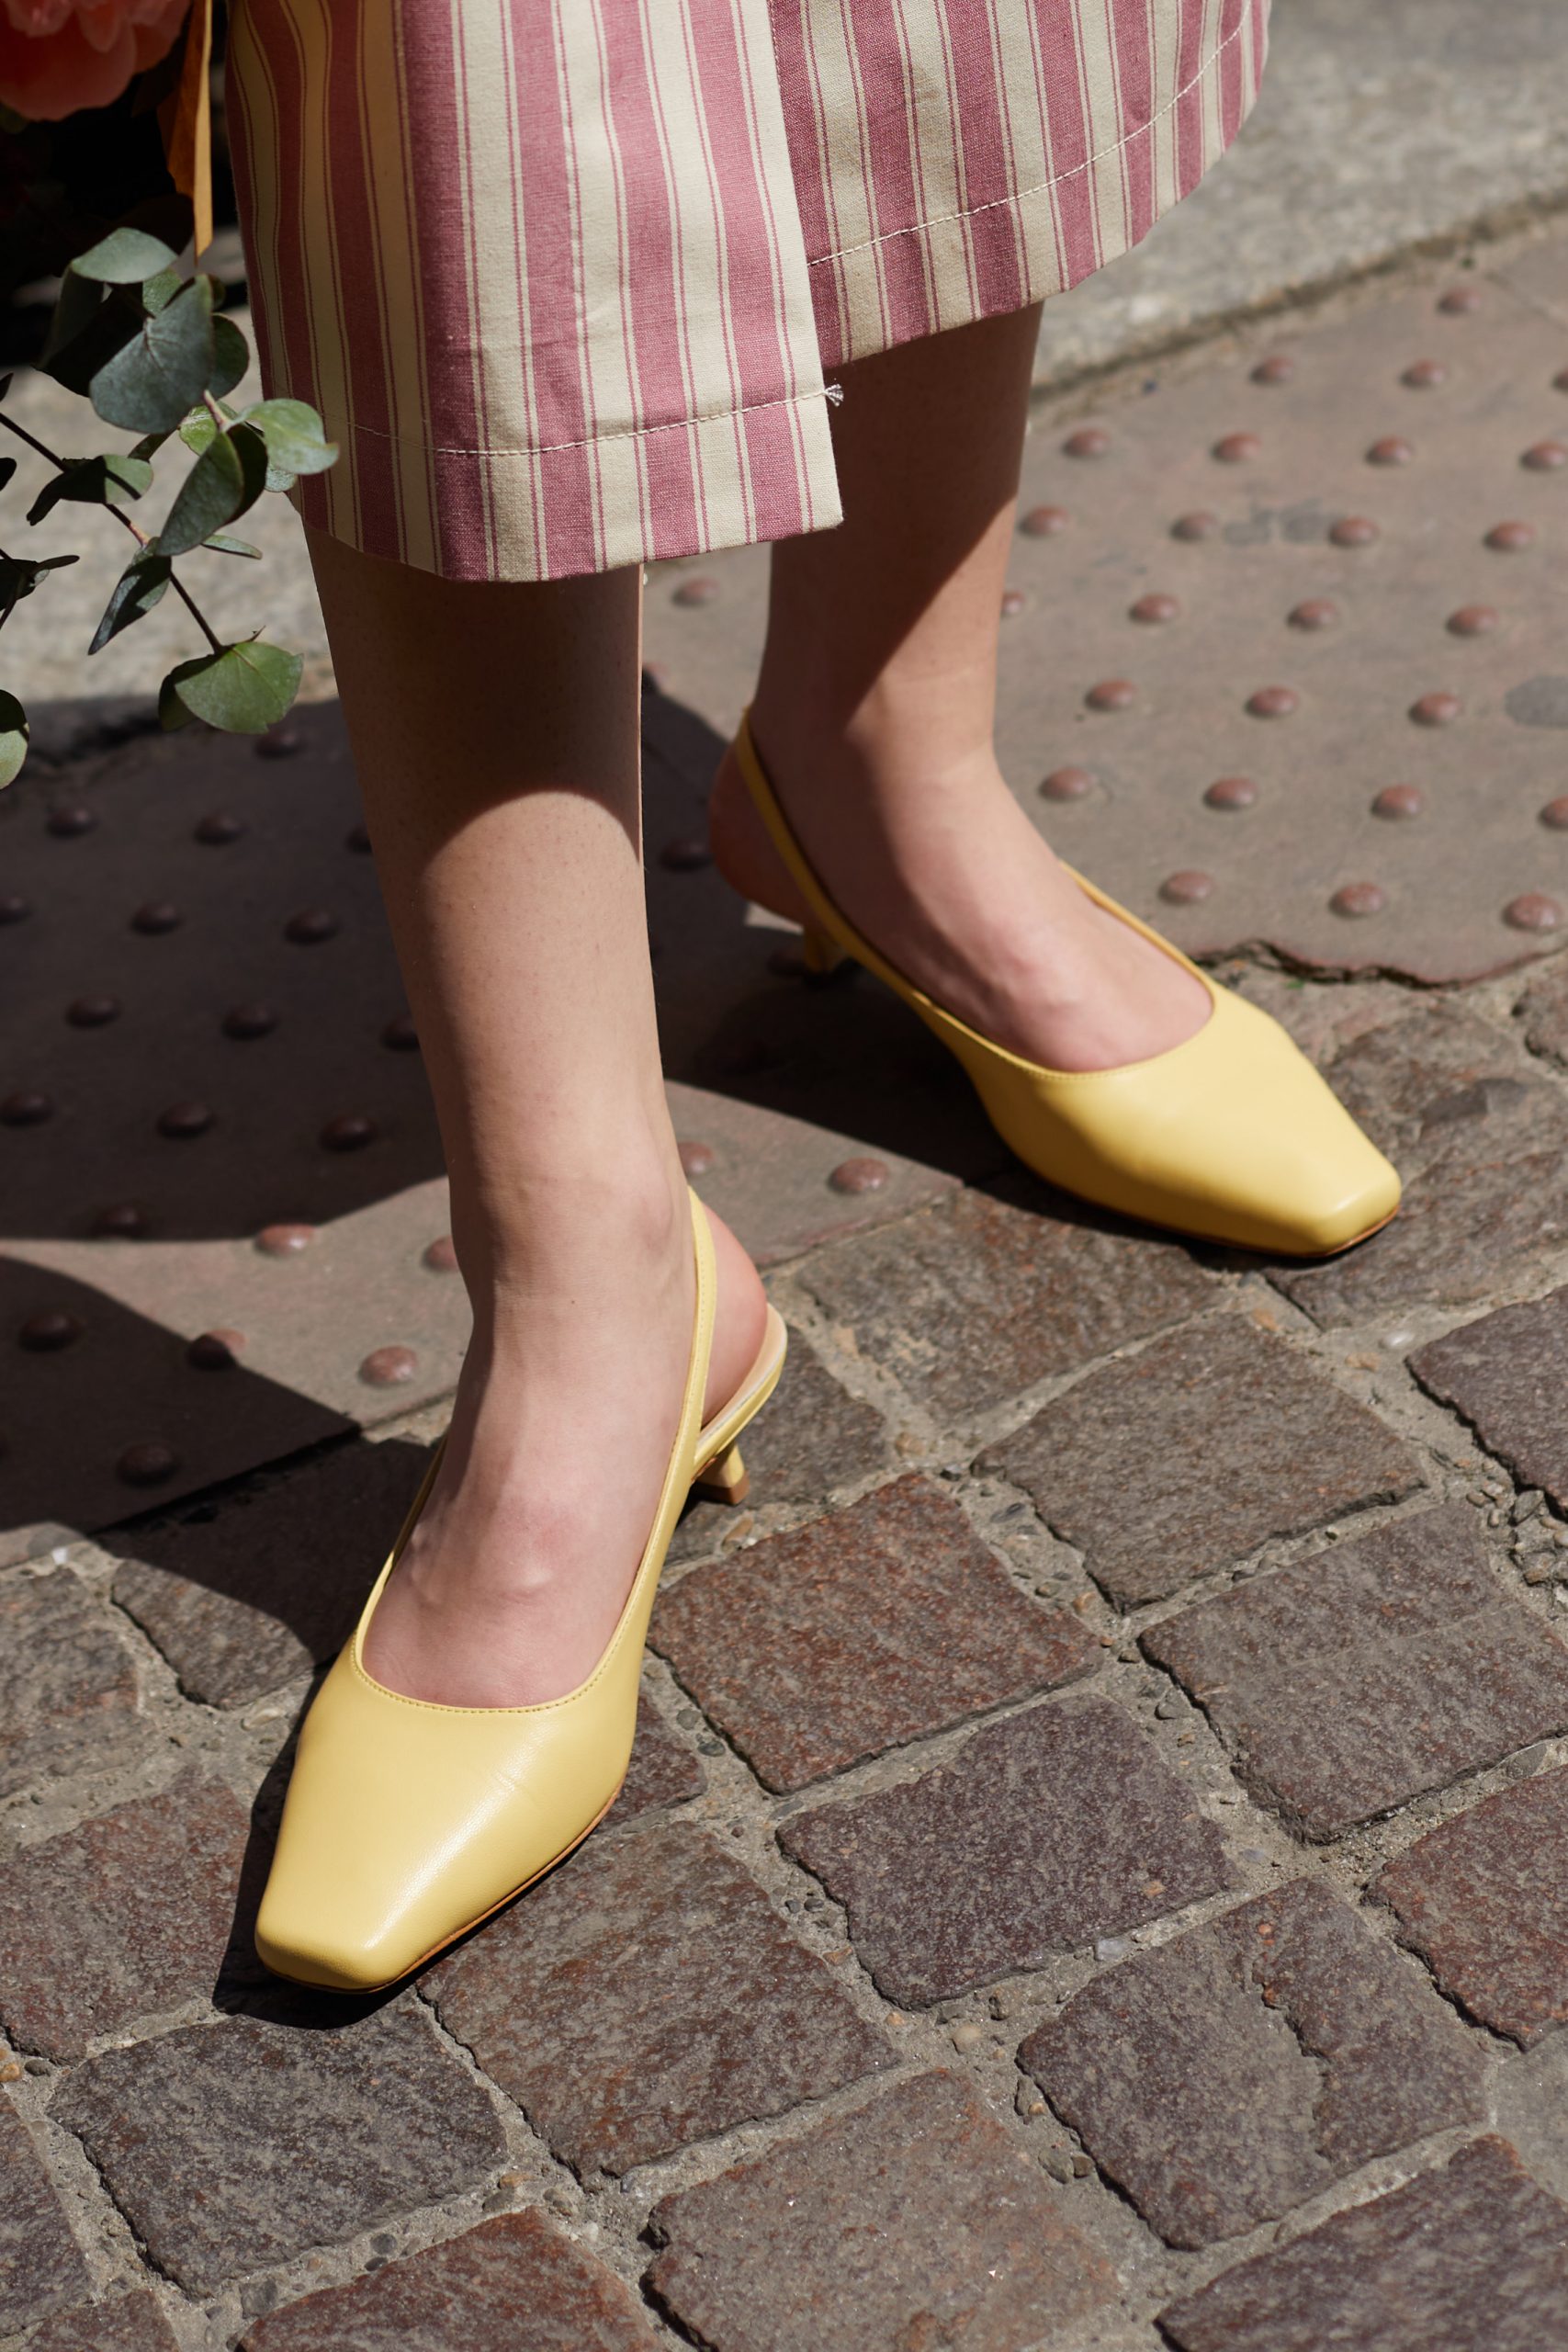 Stylish PRADA Yellow Slingback Heels from the 90s